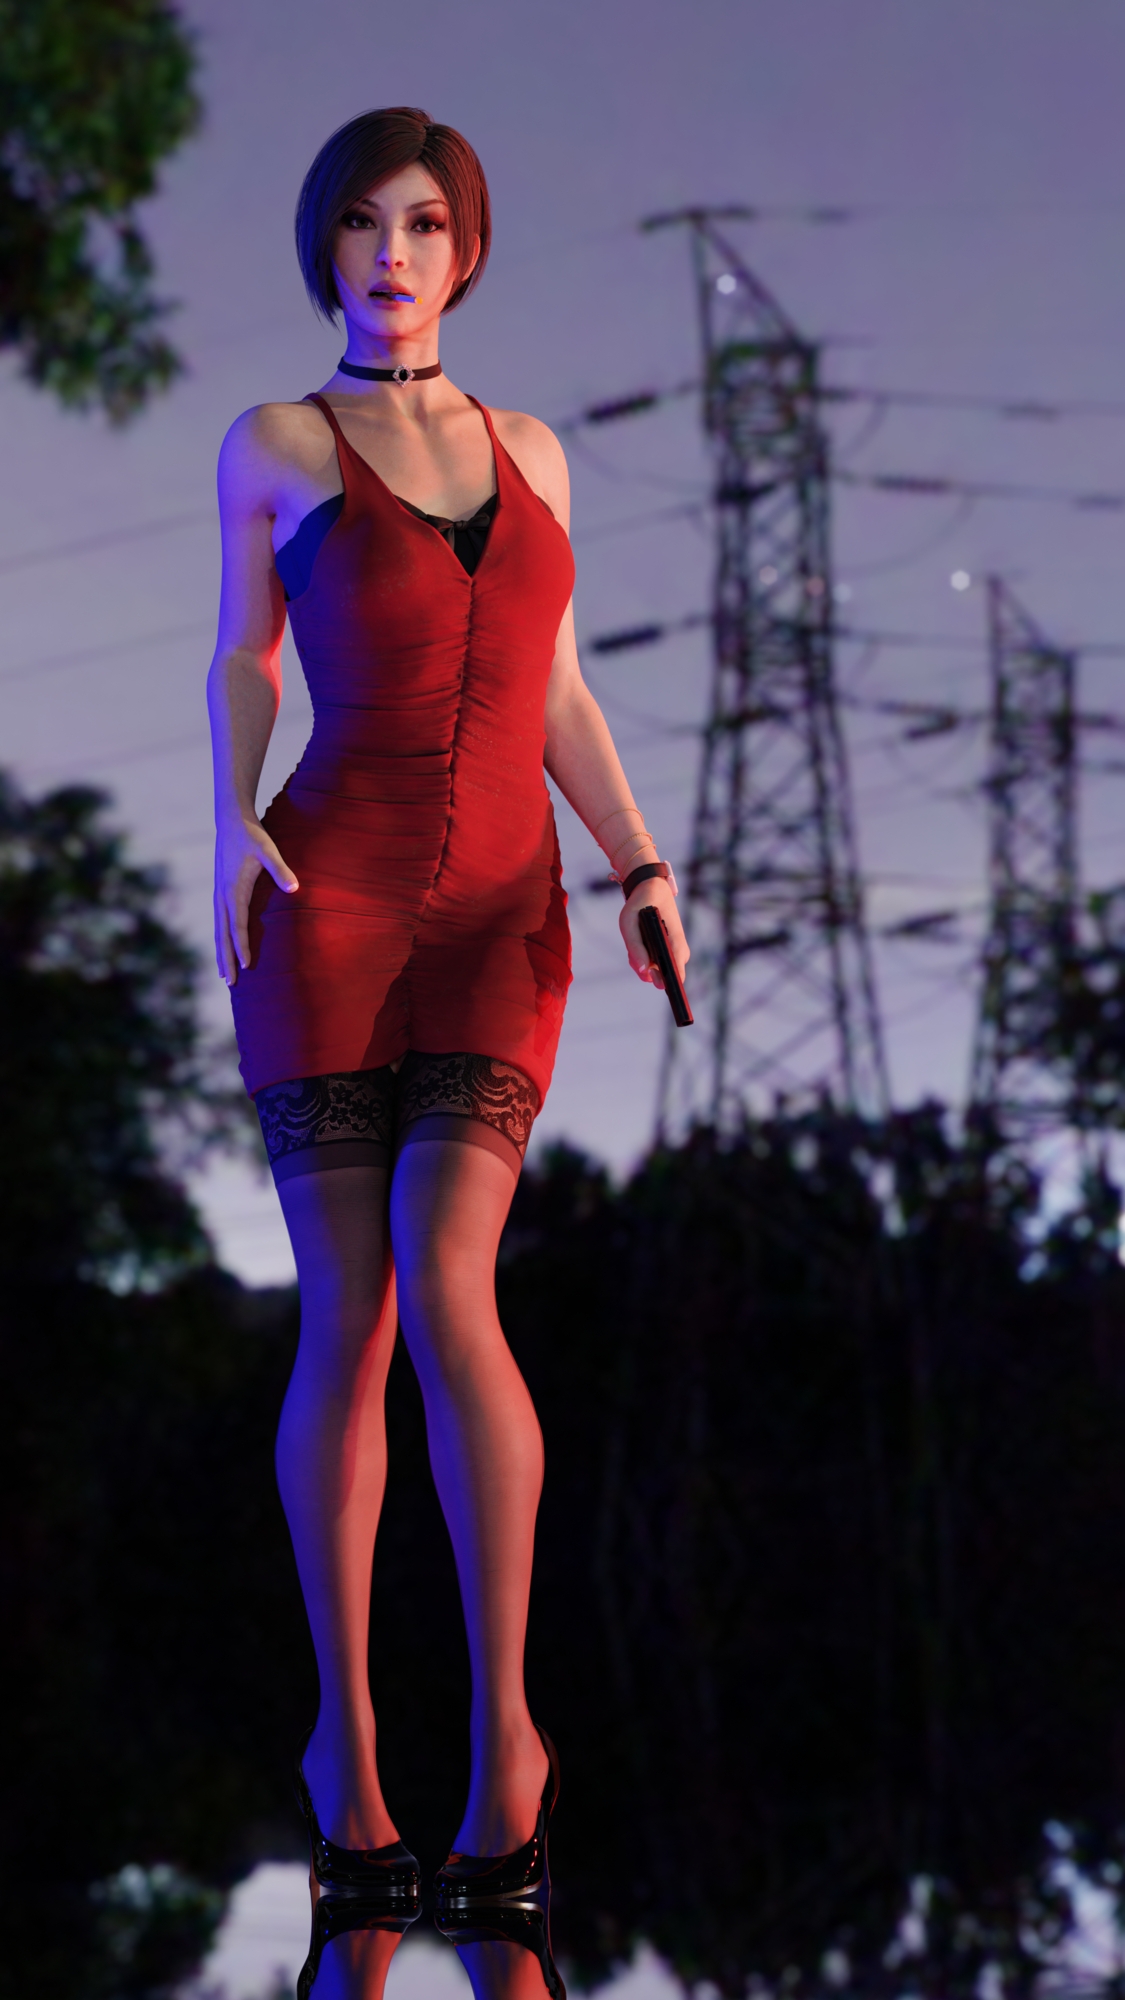 Agent Wong at a crime scene Ada Wong Resident Evil 2 Remake Dress Stockings High Heels Long Legs Smoking Sexy